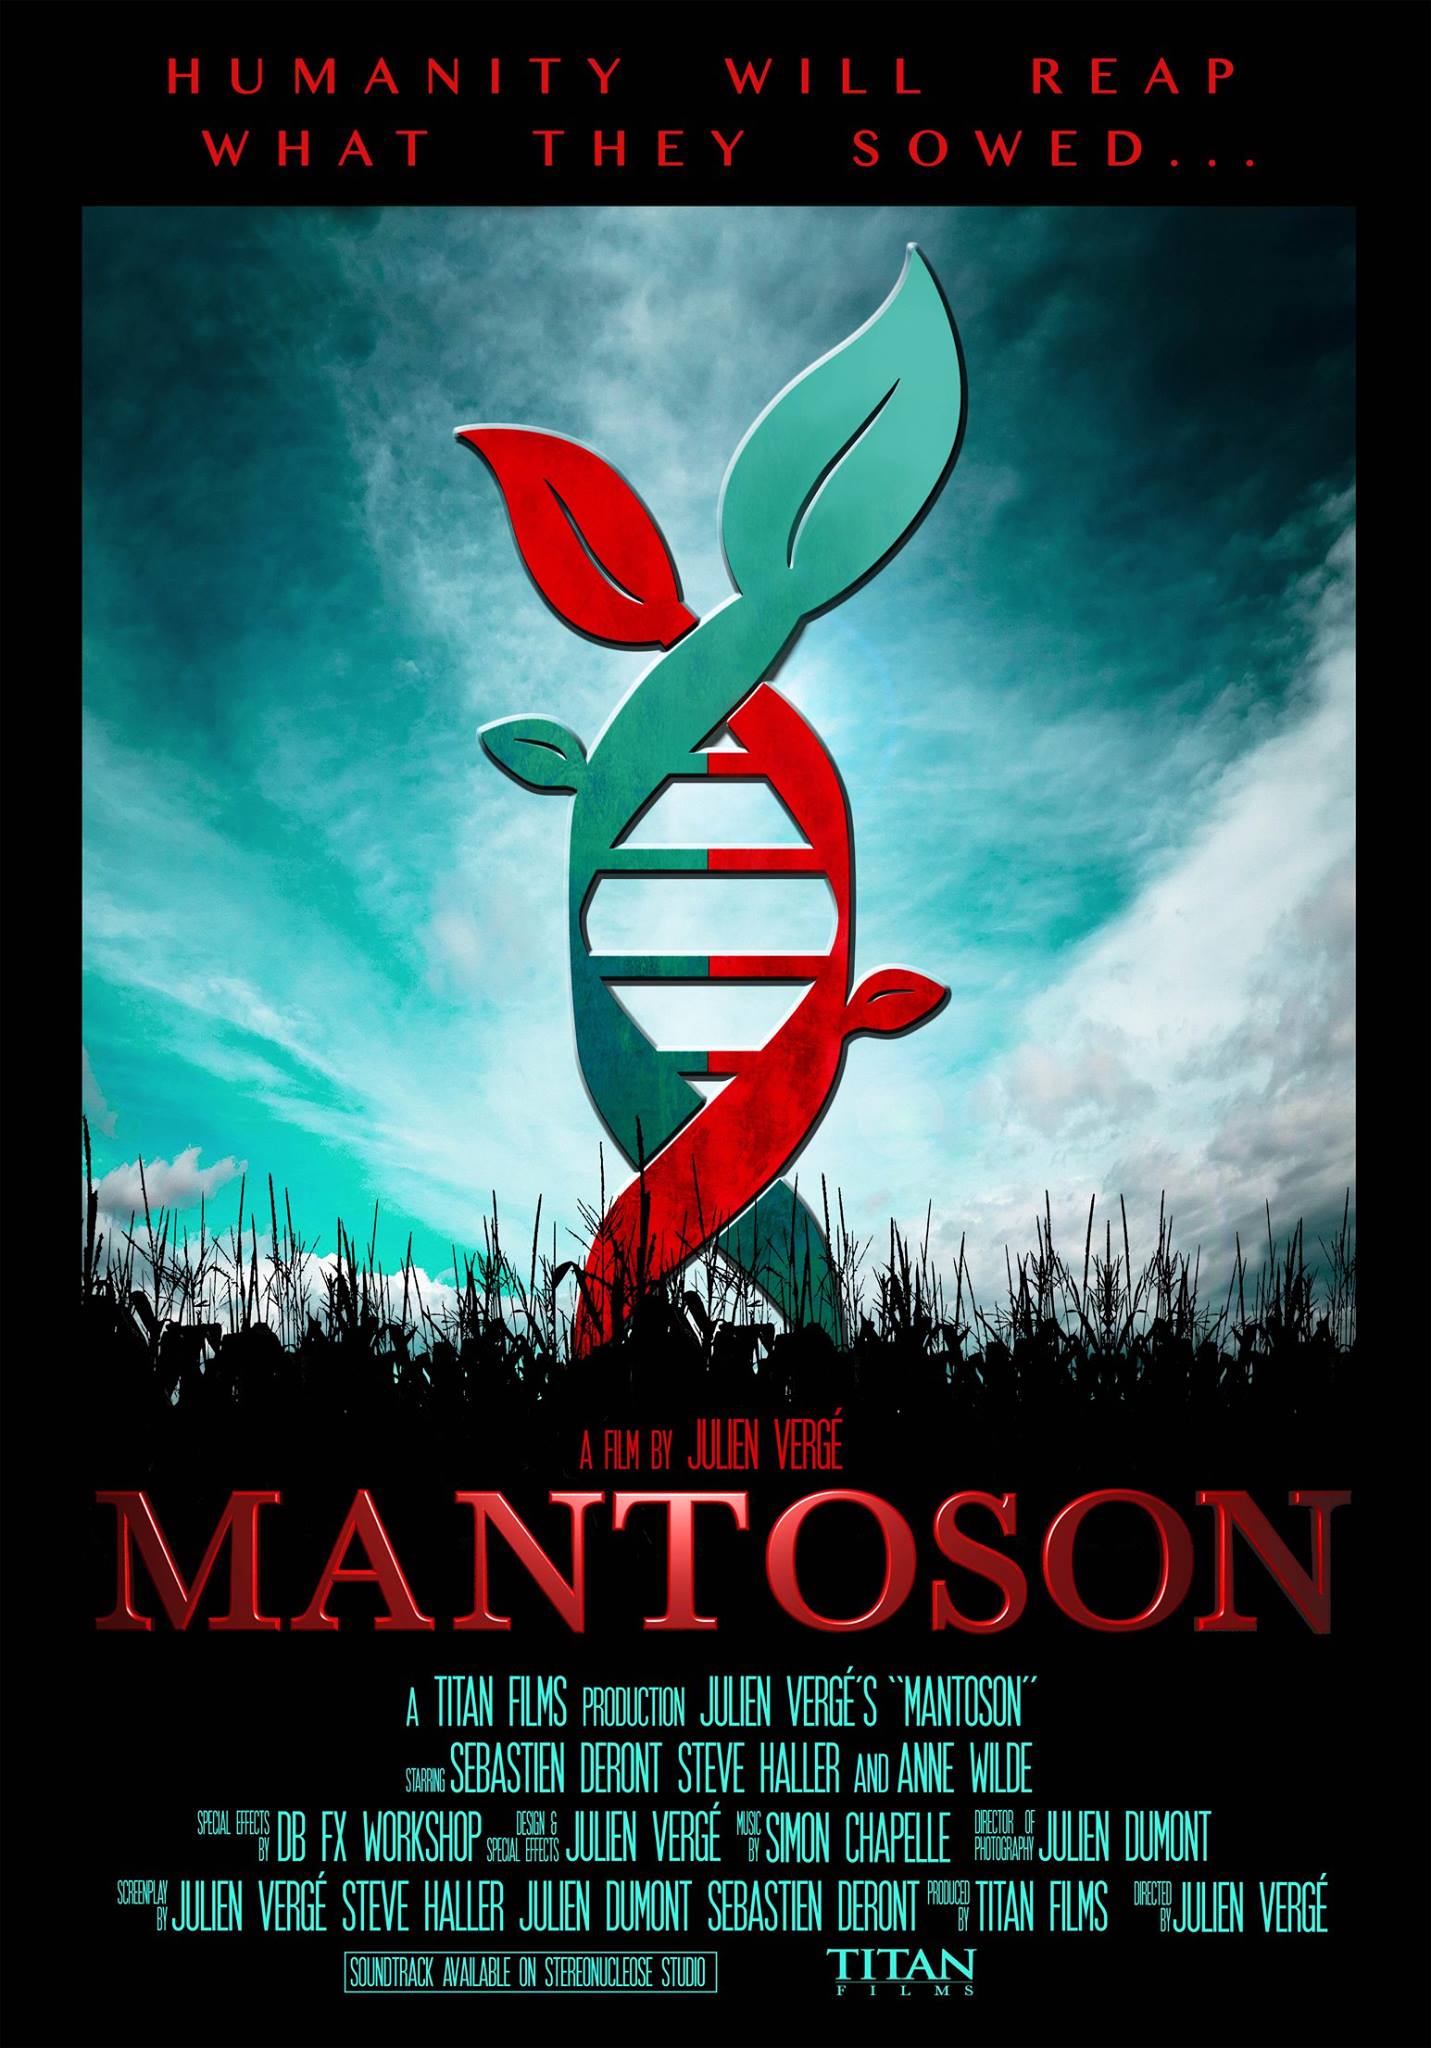 Mantoson Biotechnology